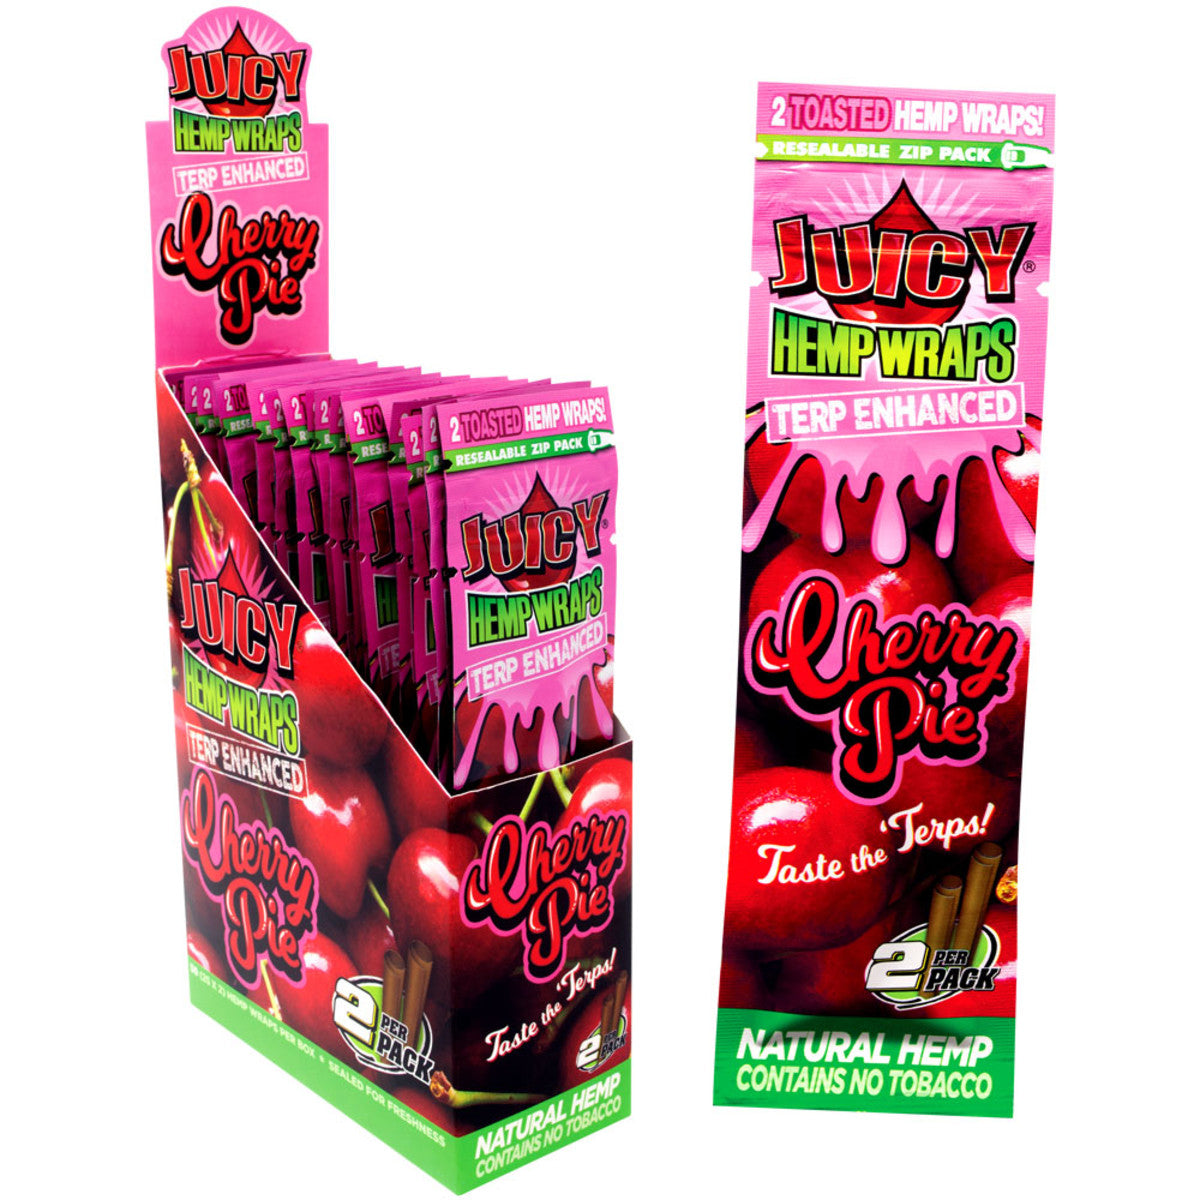 Juicy Terp Enhanced Hemp Wraps | 25pk Box